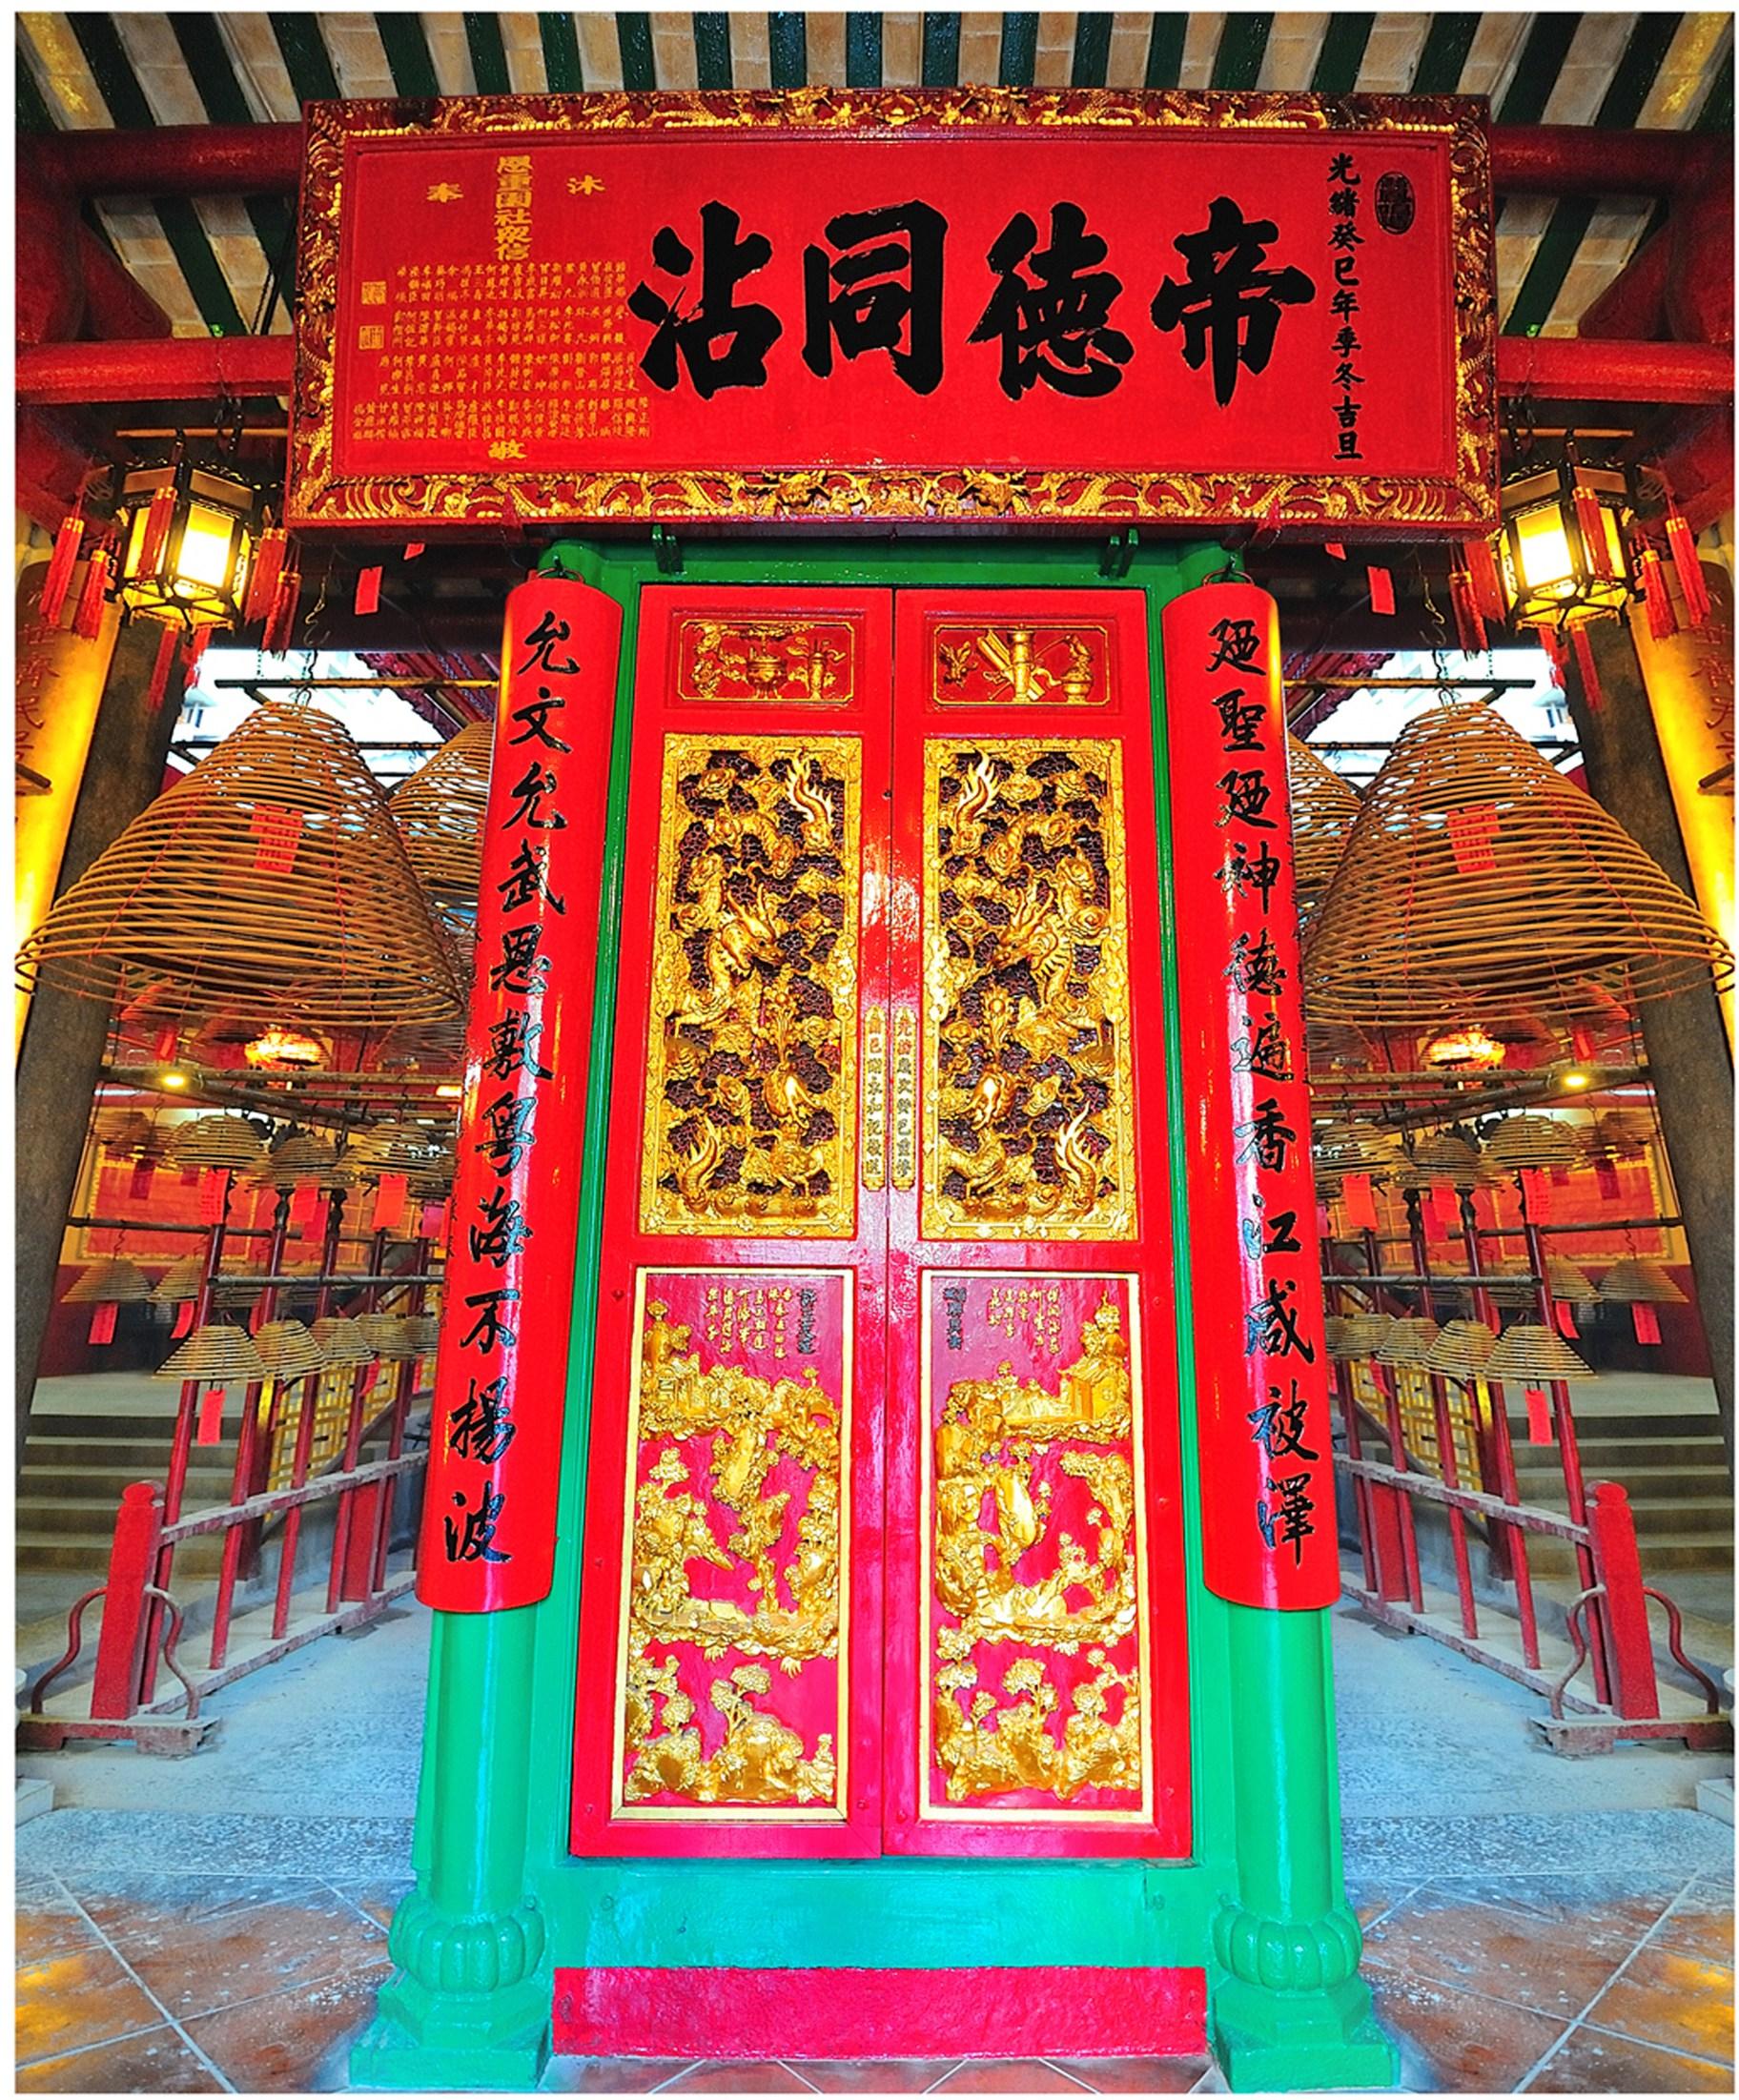 Take in the historic Man Mo temple, built in 1847 (Hong Kong Tourism Board/discoverhongkong.com)